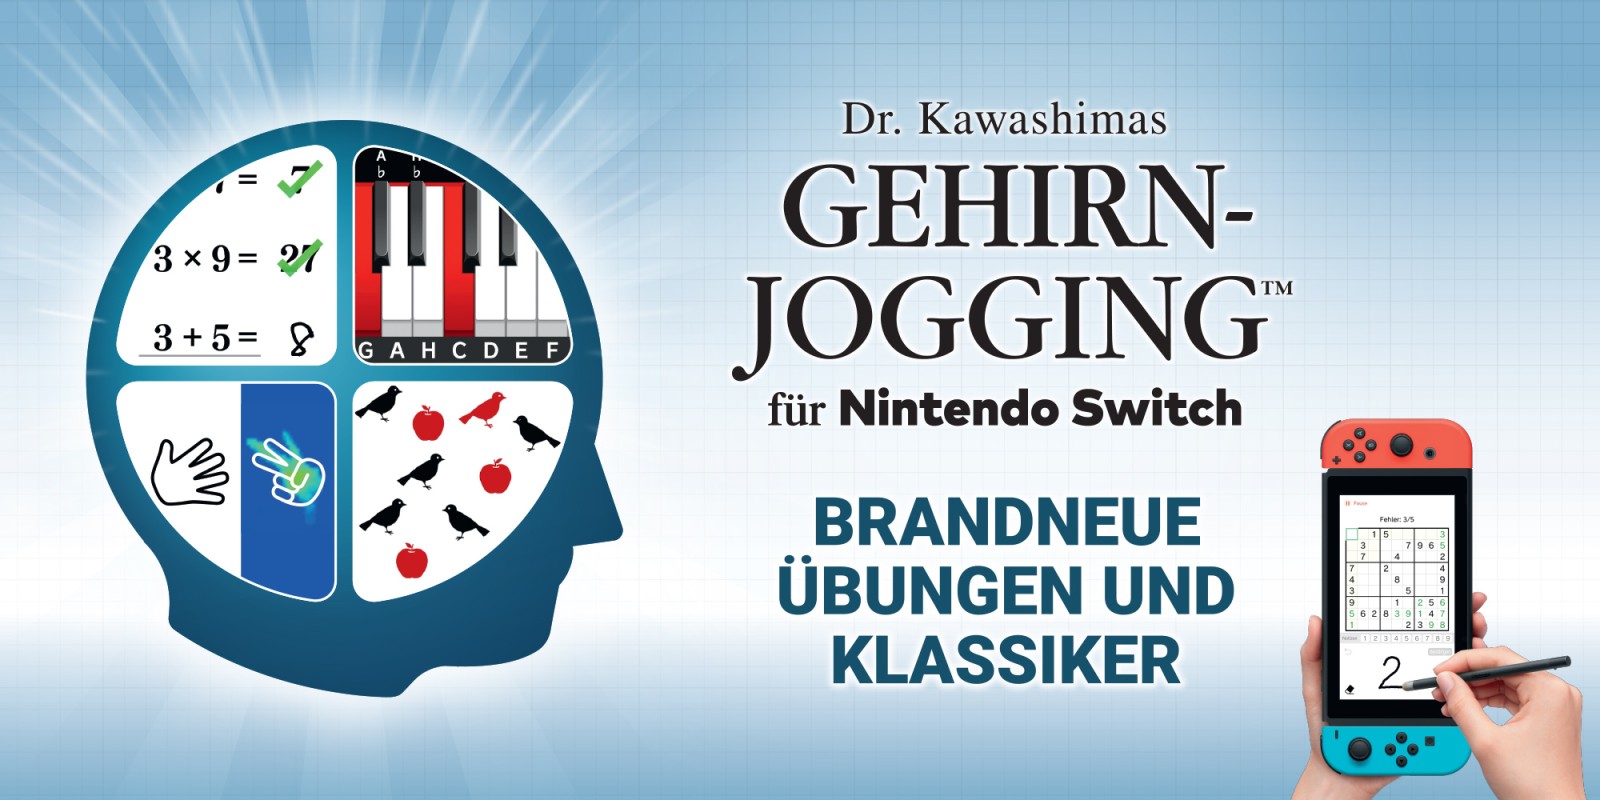 Dr. Kawashimas Gehirn-Jogging für Nintendo Switch